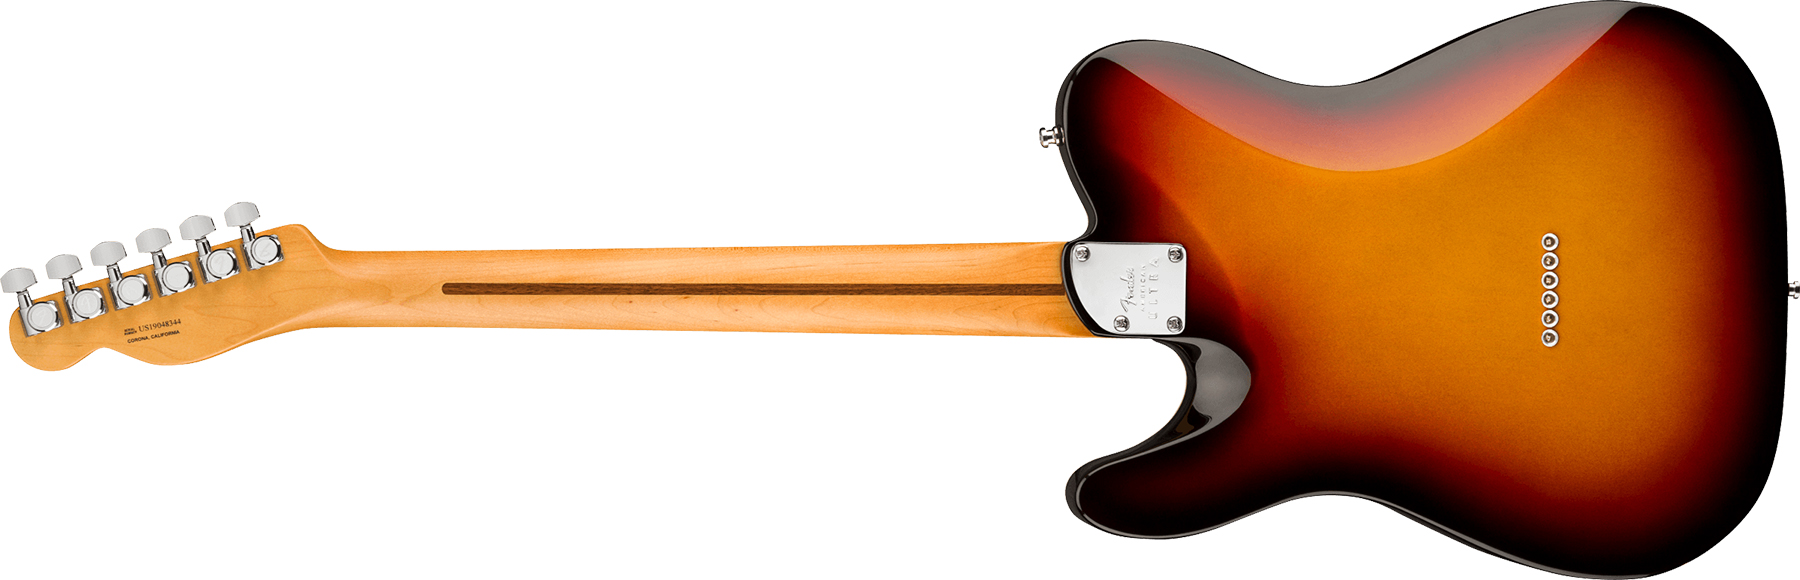 Fender Tele American Ultra 2019 Usa Mn - Ultraburst - Televorm elektrische gitaar - Variation 1